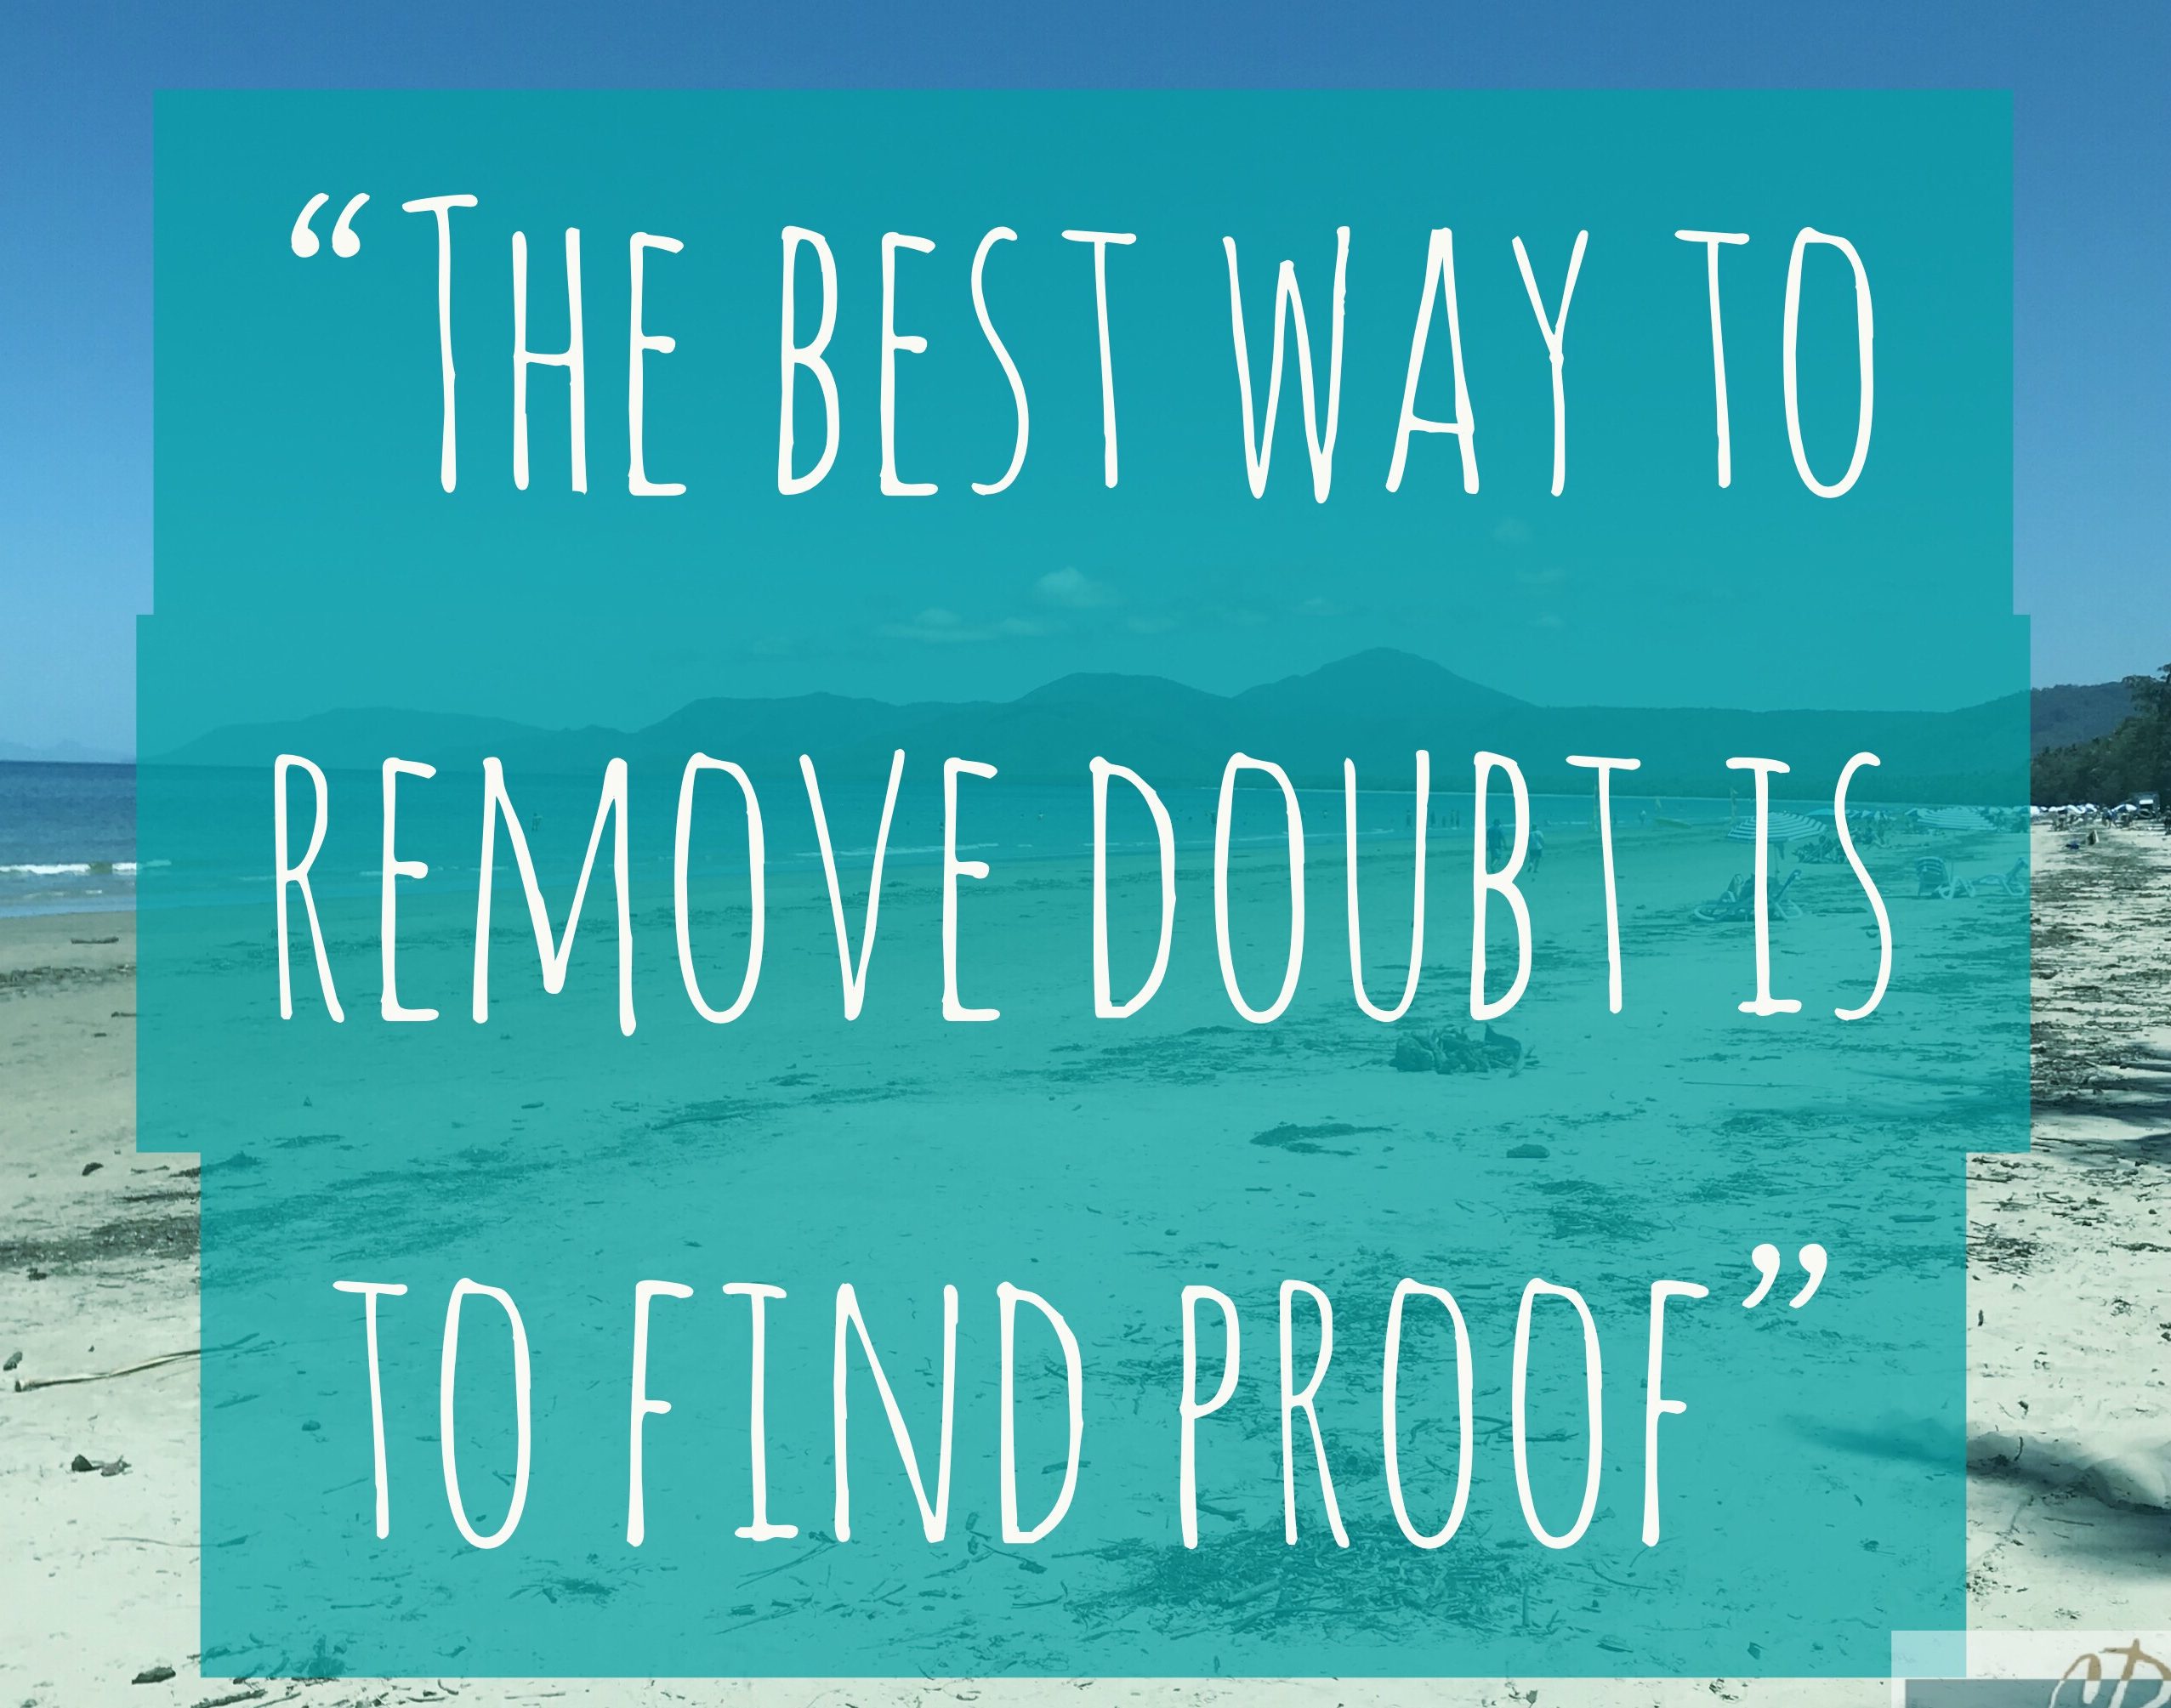 remove doubt quote